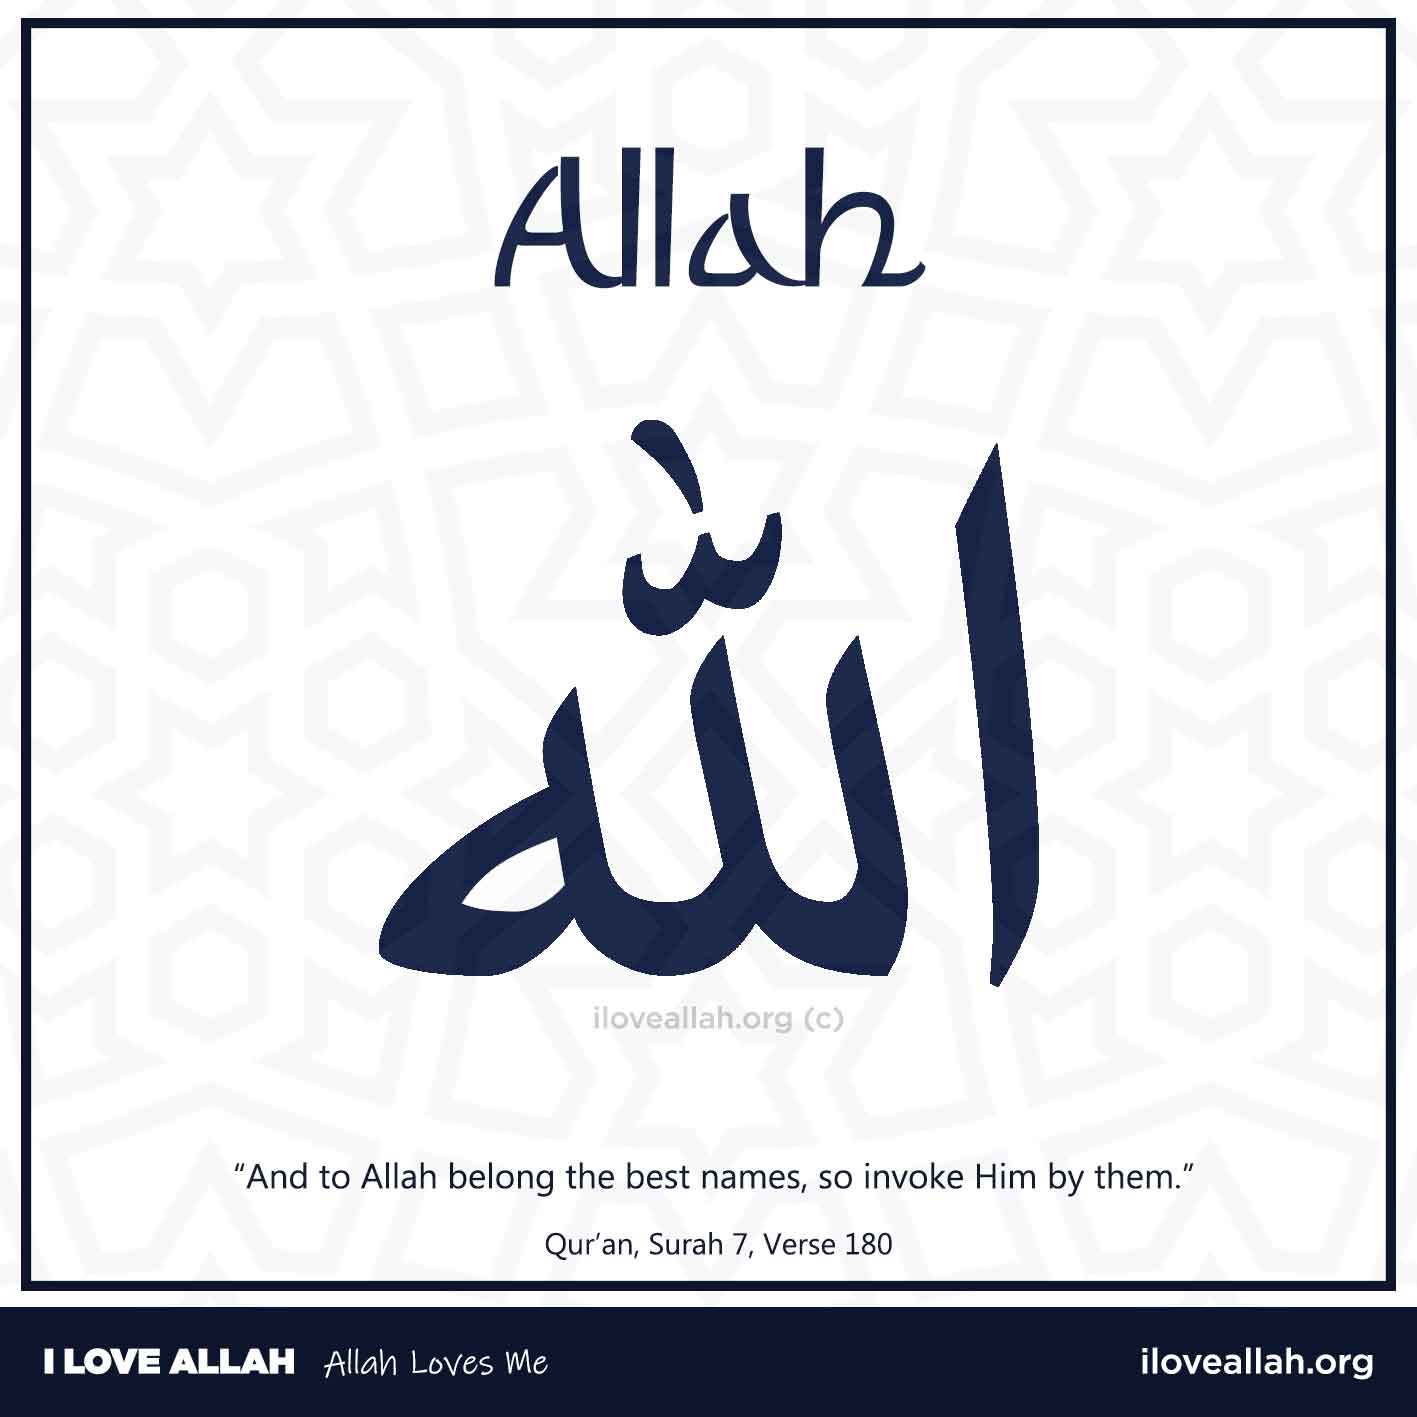 99 Names of Allah - Al Asma Ul Husna - I Love Allah - Allah Loves Me - iloveallah.org